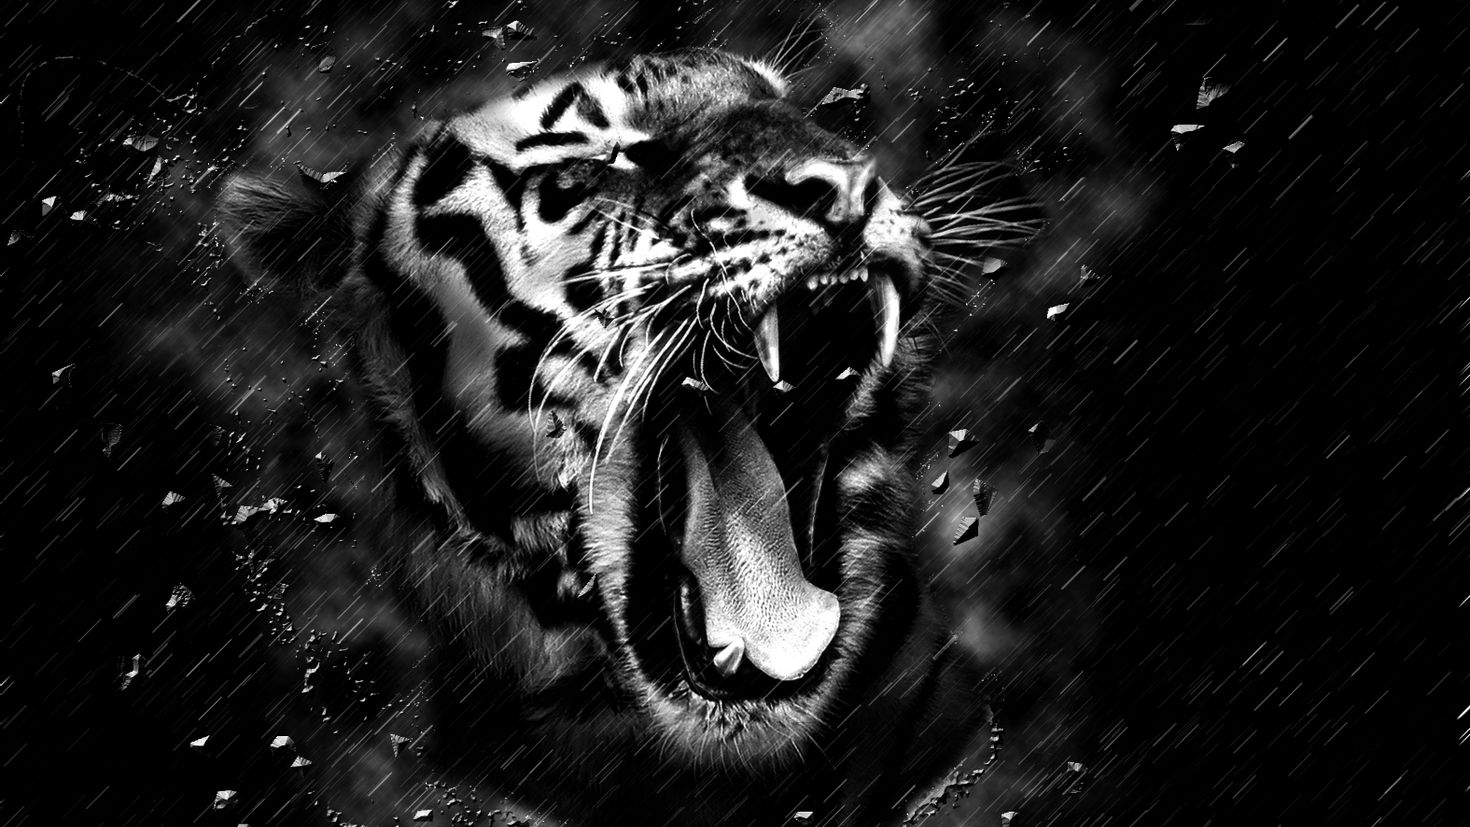 Заставки оскал. Тигр оскал анфас. Тигр на черном фоне. Тигр рычит. Картинки оскал.